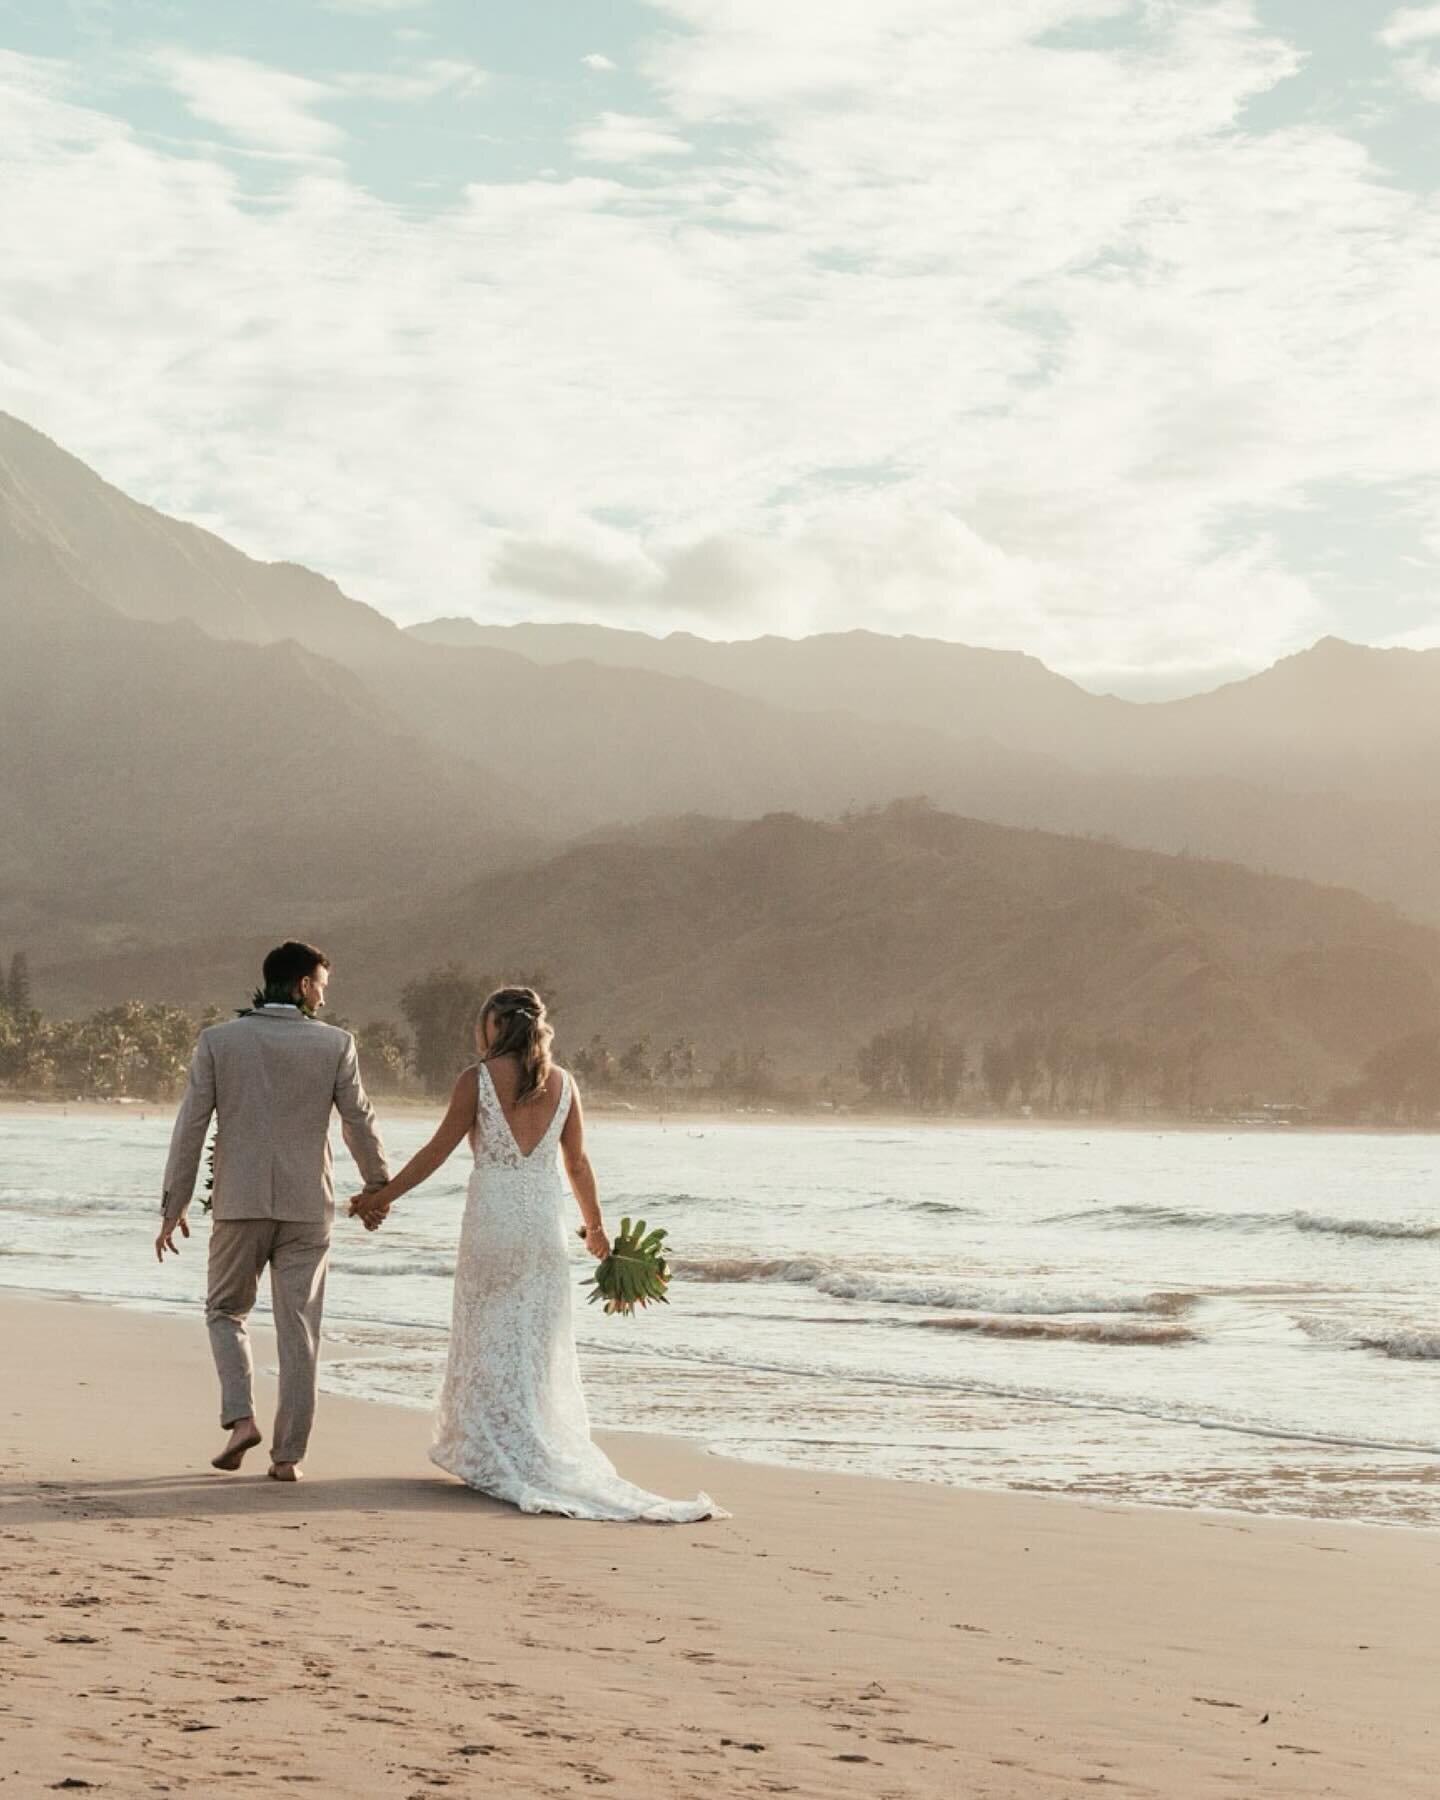 Sunset vibes 🌅
.
Bookings and inquiries at www.ikaika.photo 🤙🏾
.
.
.
.
.
#weddingphotography #weddingphotographer #kauaiphotograher #kauaiphotography #hawaiiphotographer #hawaiiphotography #kauaiweddingphotographer #kauaiweddingphotography #kauaiw